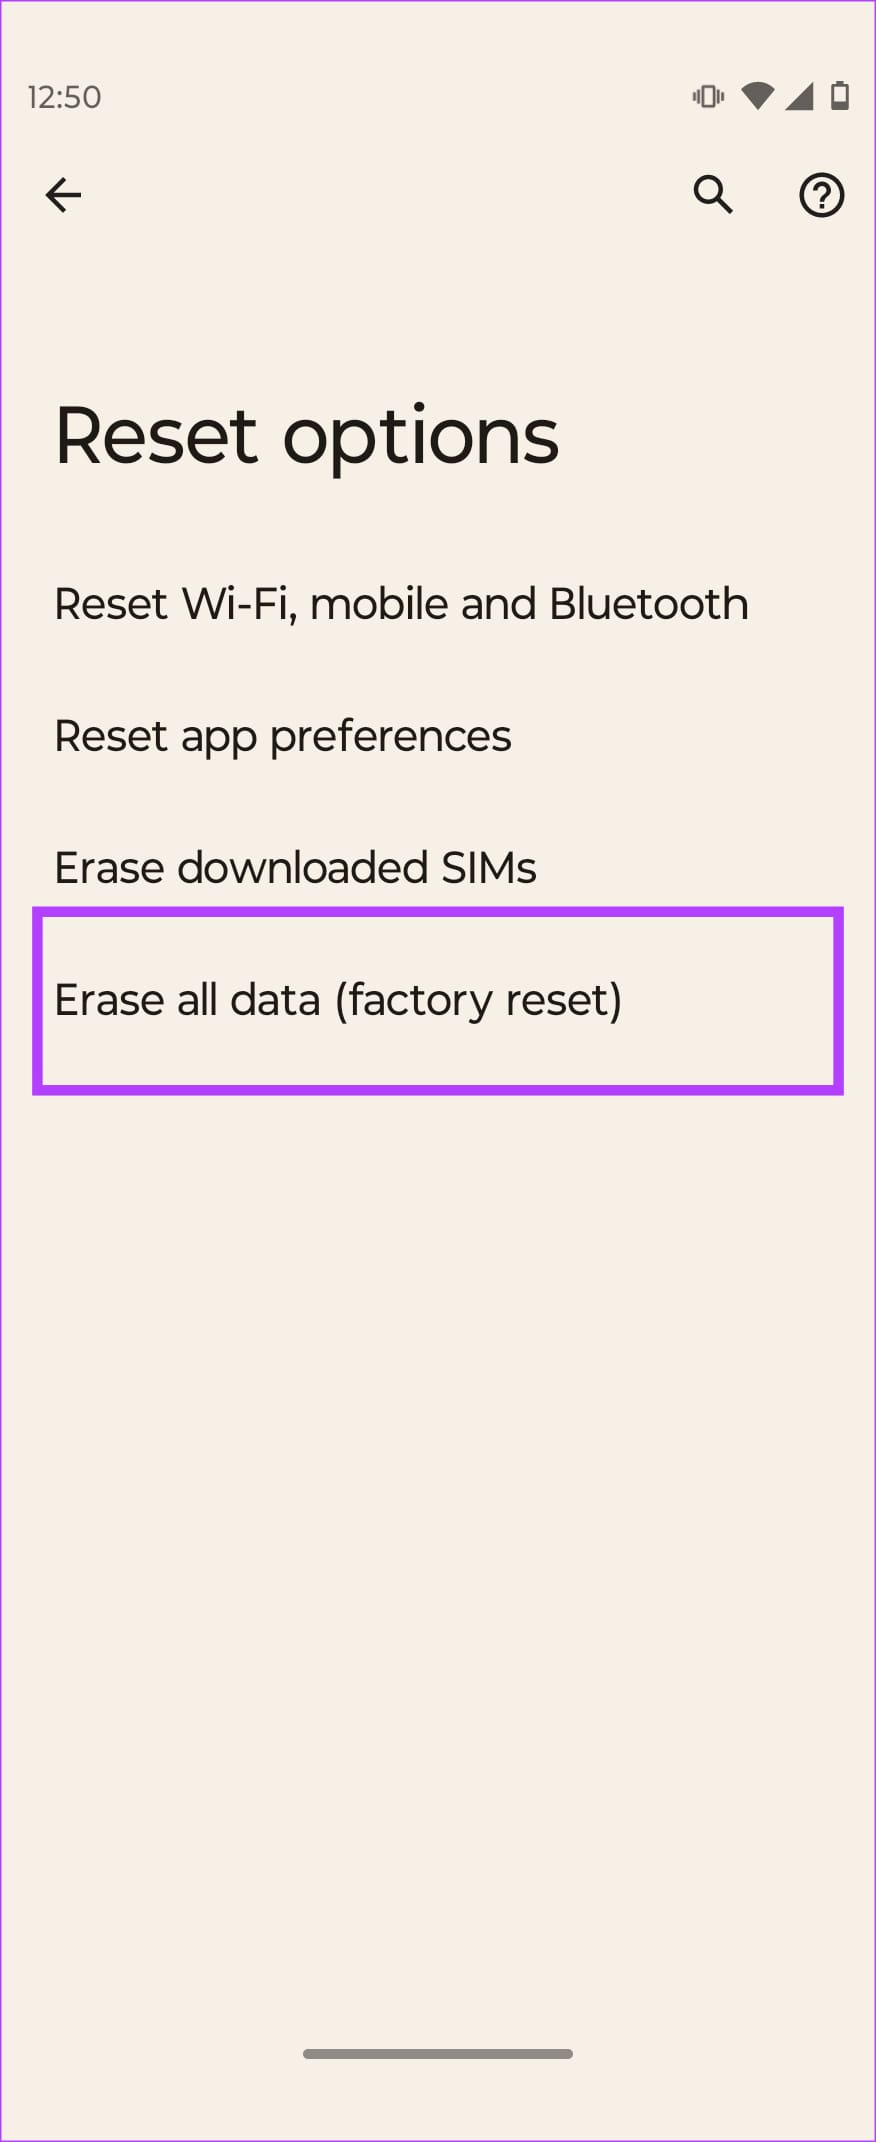 Choose ‘Erase all data (factory reset)